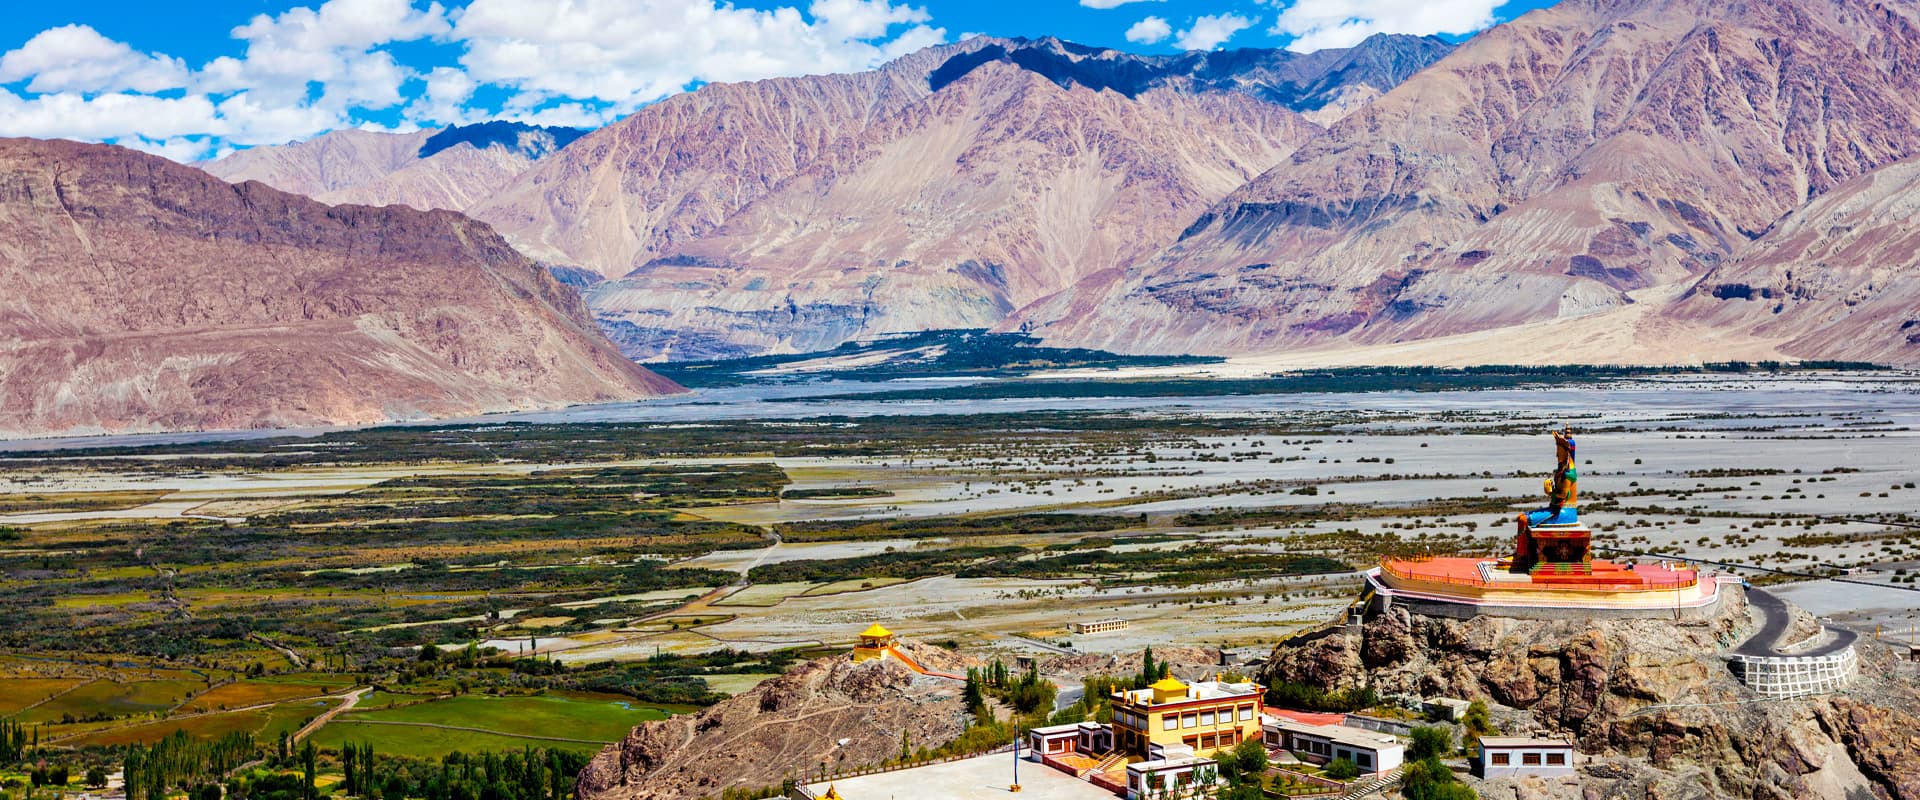 Leh & Ladakh with Nubra Valley